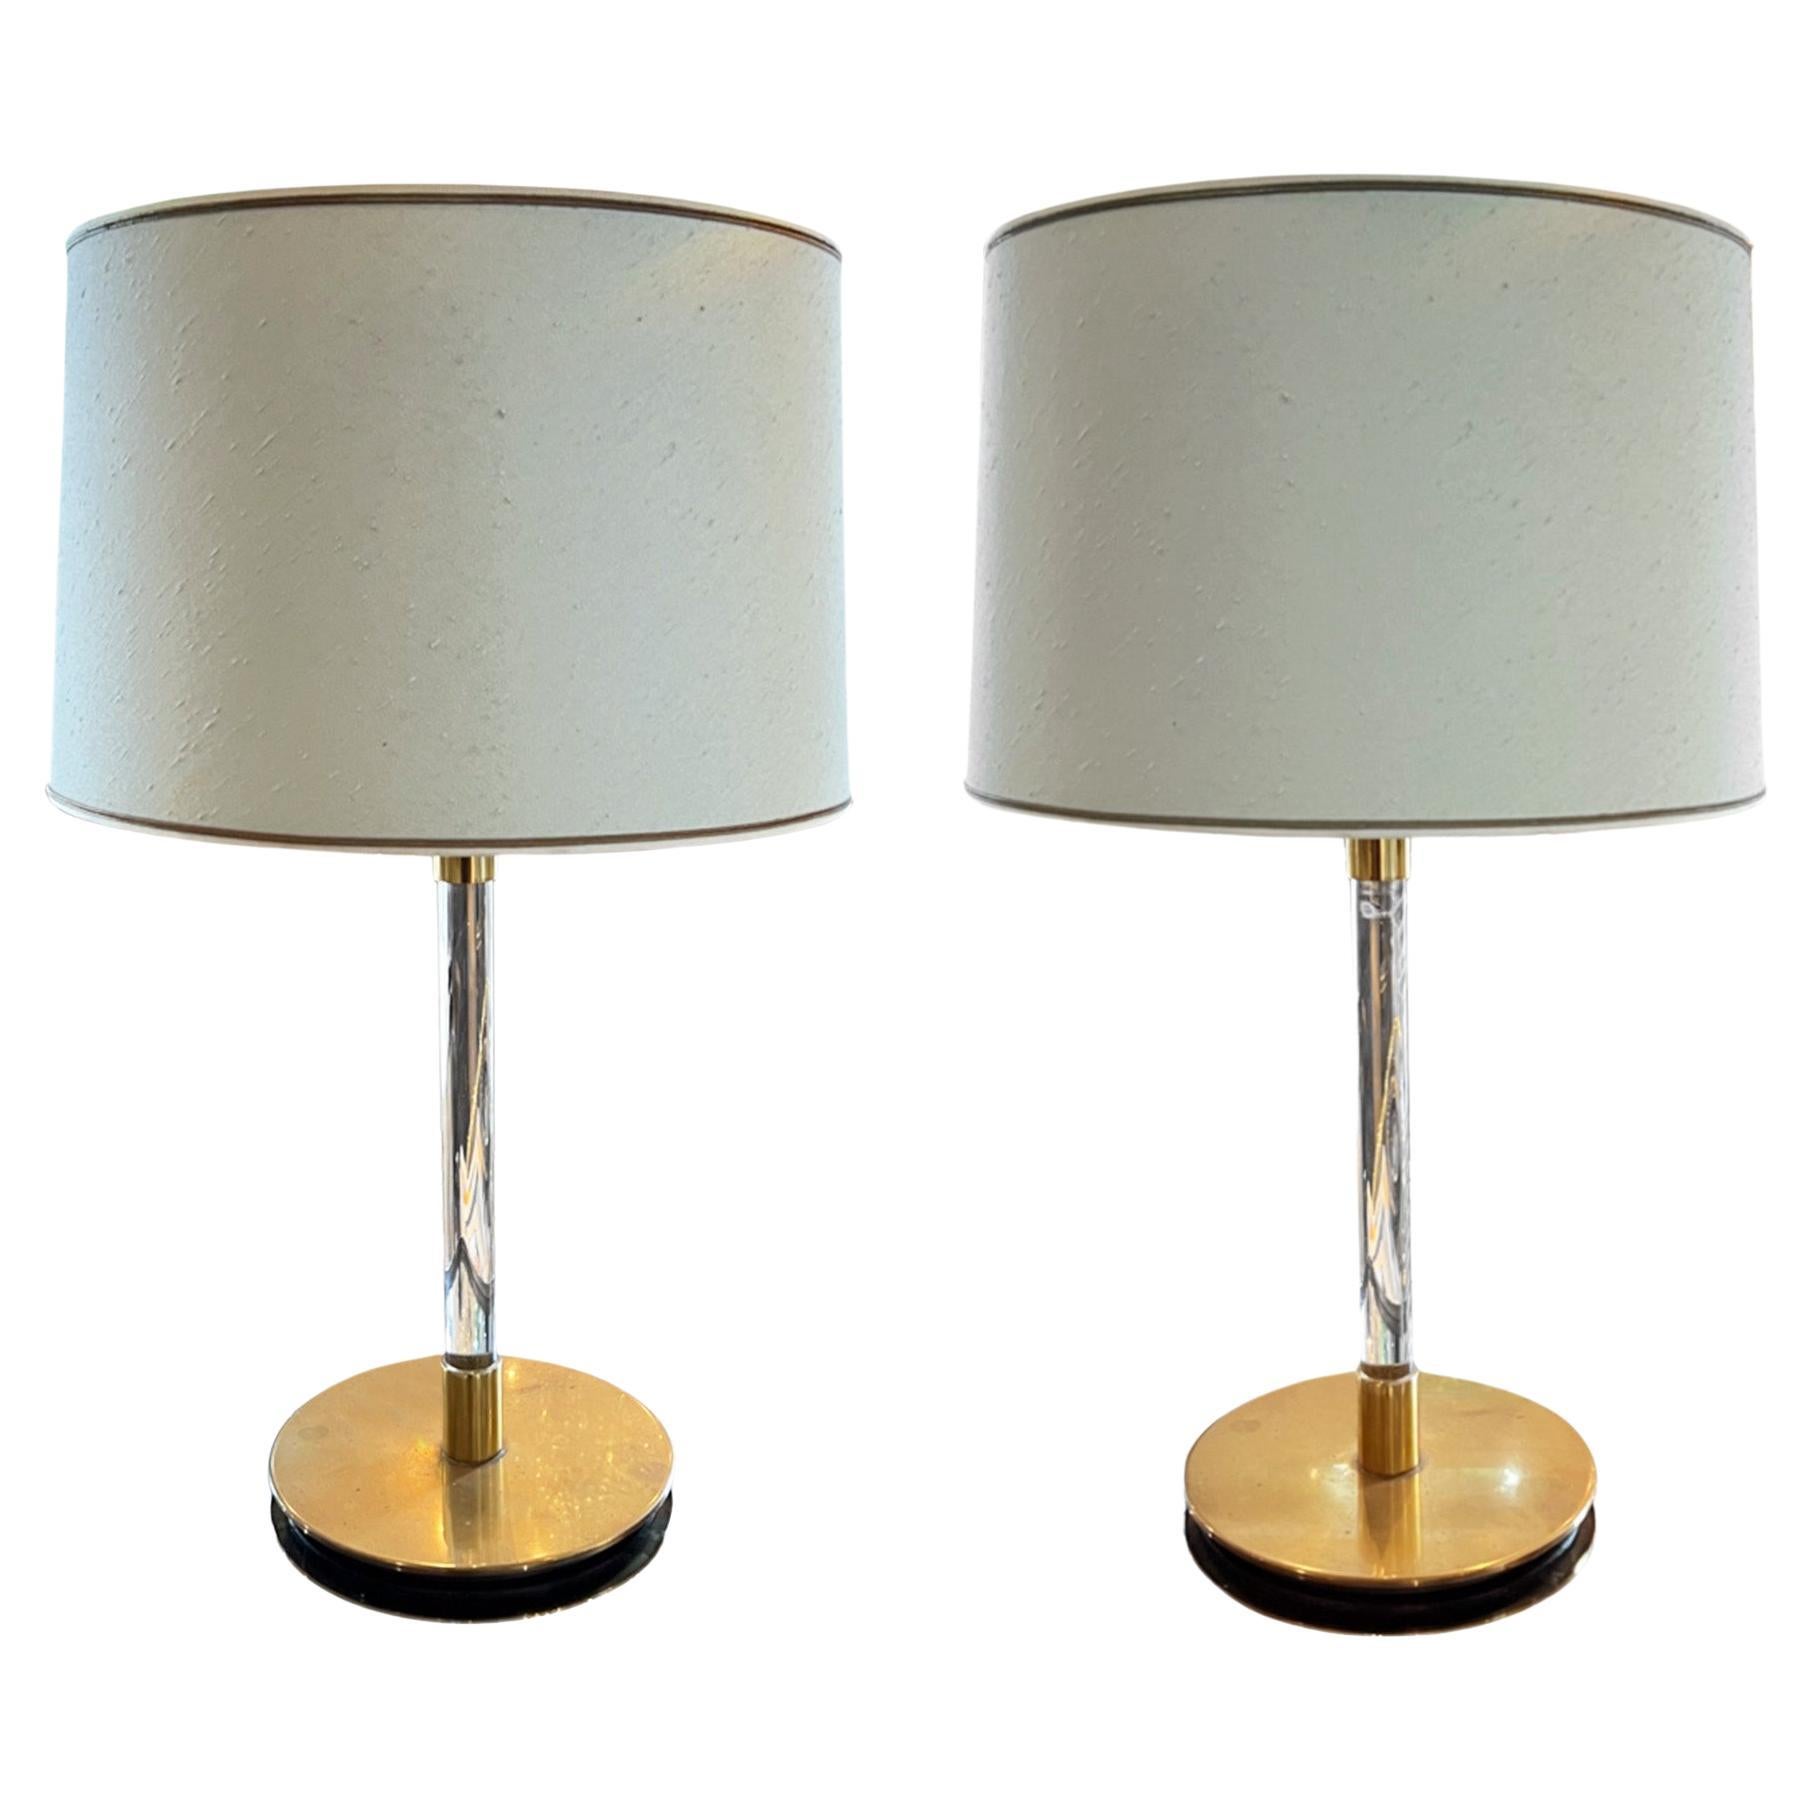 Metalarte Spain Table Lamps